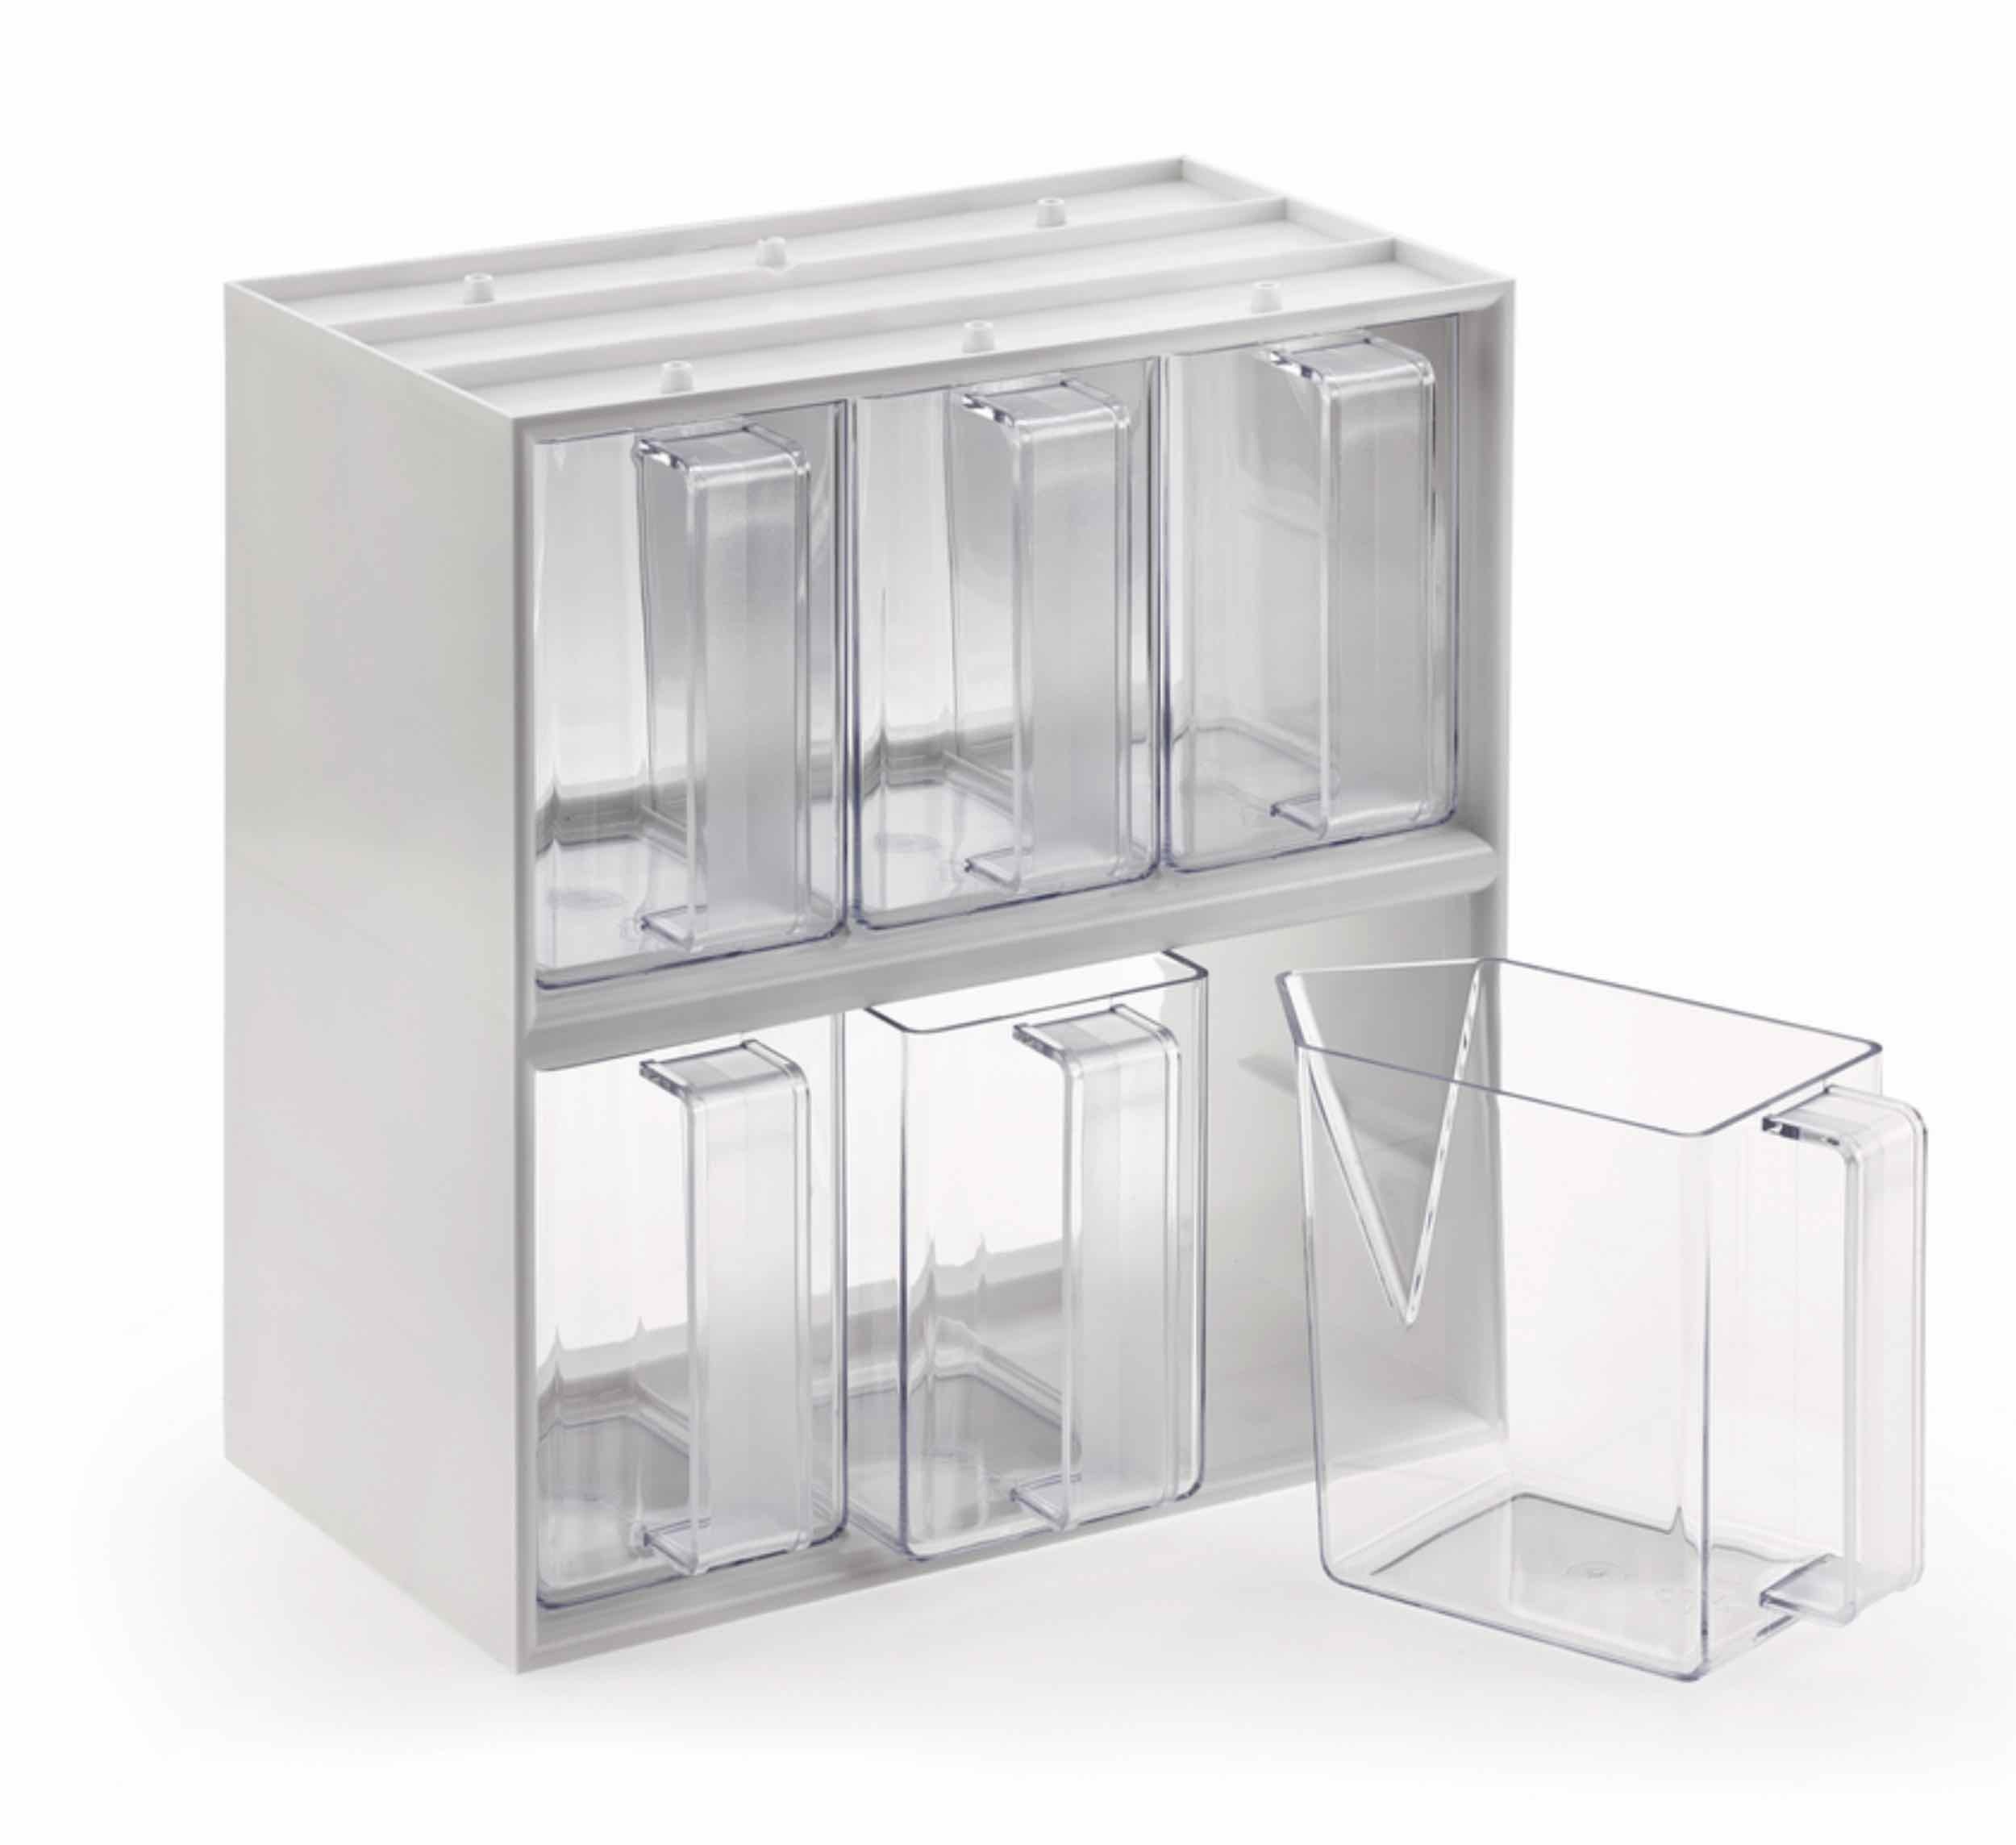 Lux NABER glasklar, Naber De 6 teilig Kunststoff-Schüttenkasten Küchenregal